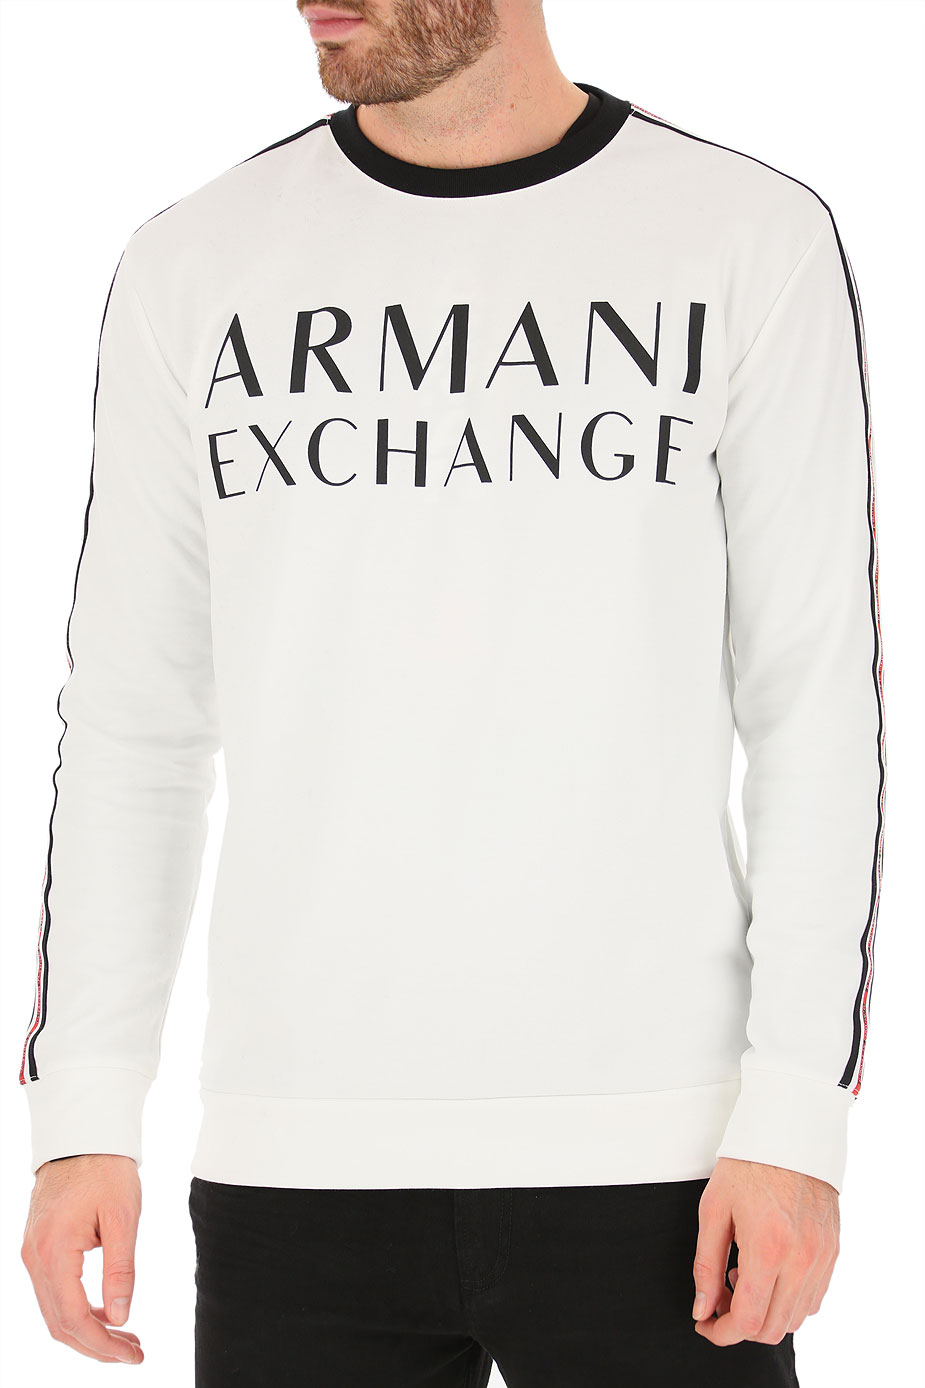 Mens Clothing Armani Exchange, Style code: 6gzm97-zj4dz-1100